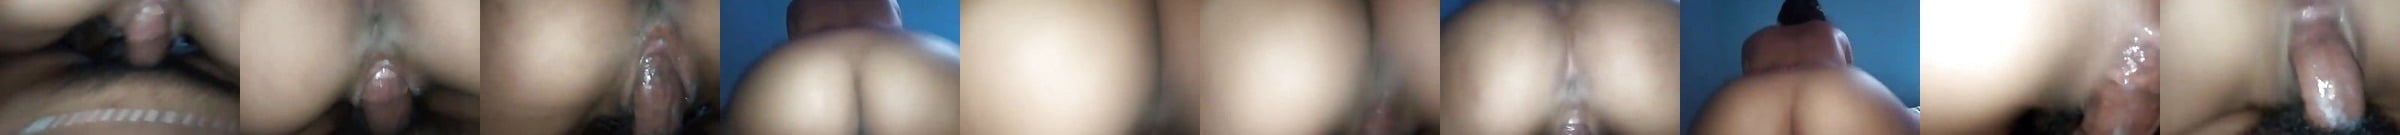 Video Call Sex Abg Indonesia Free Sex Tube Xxx Porn Video Xhamster 